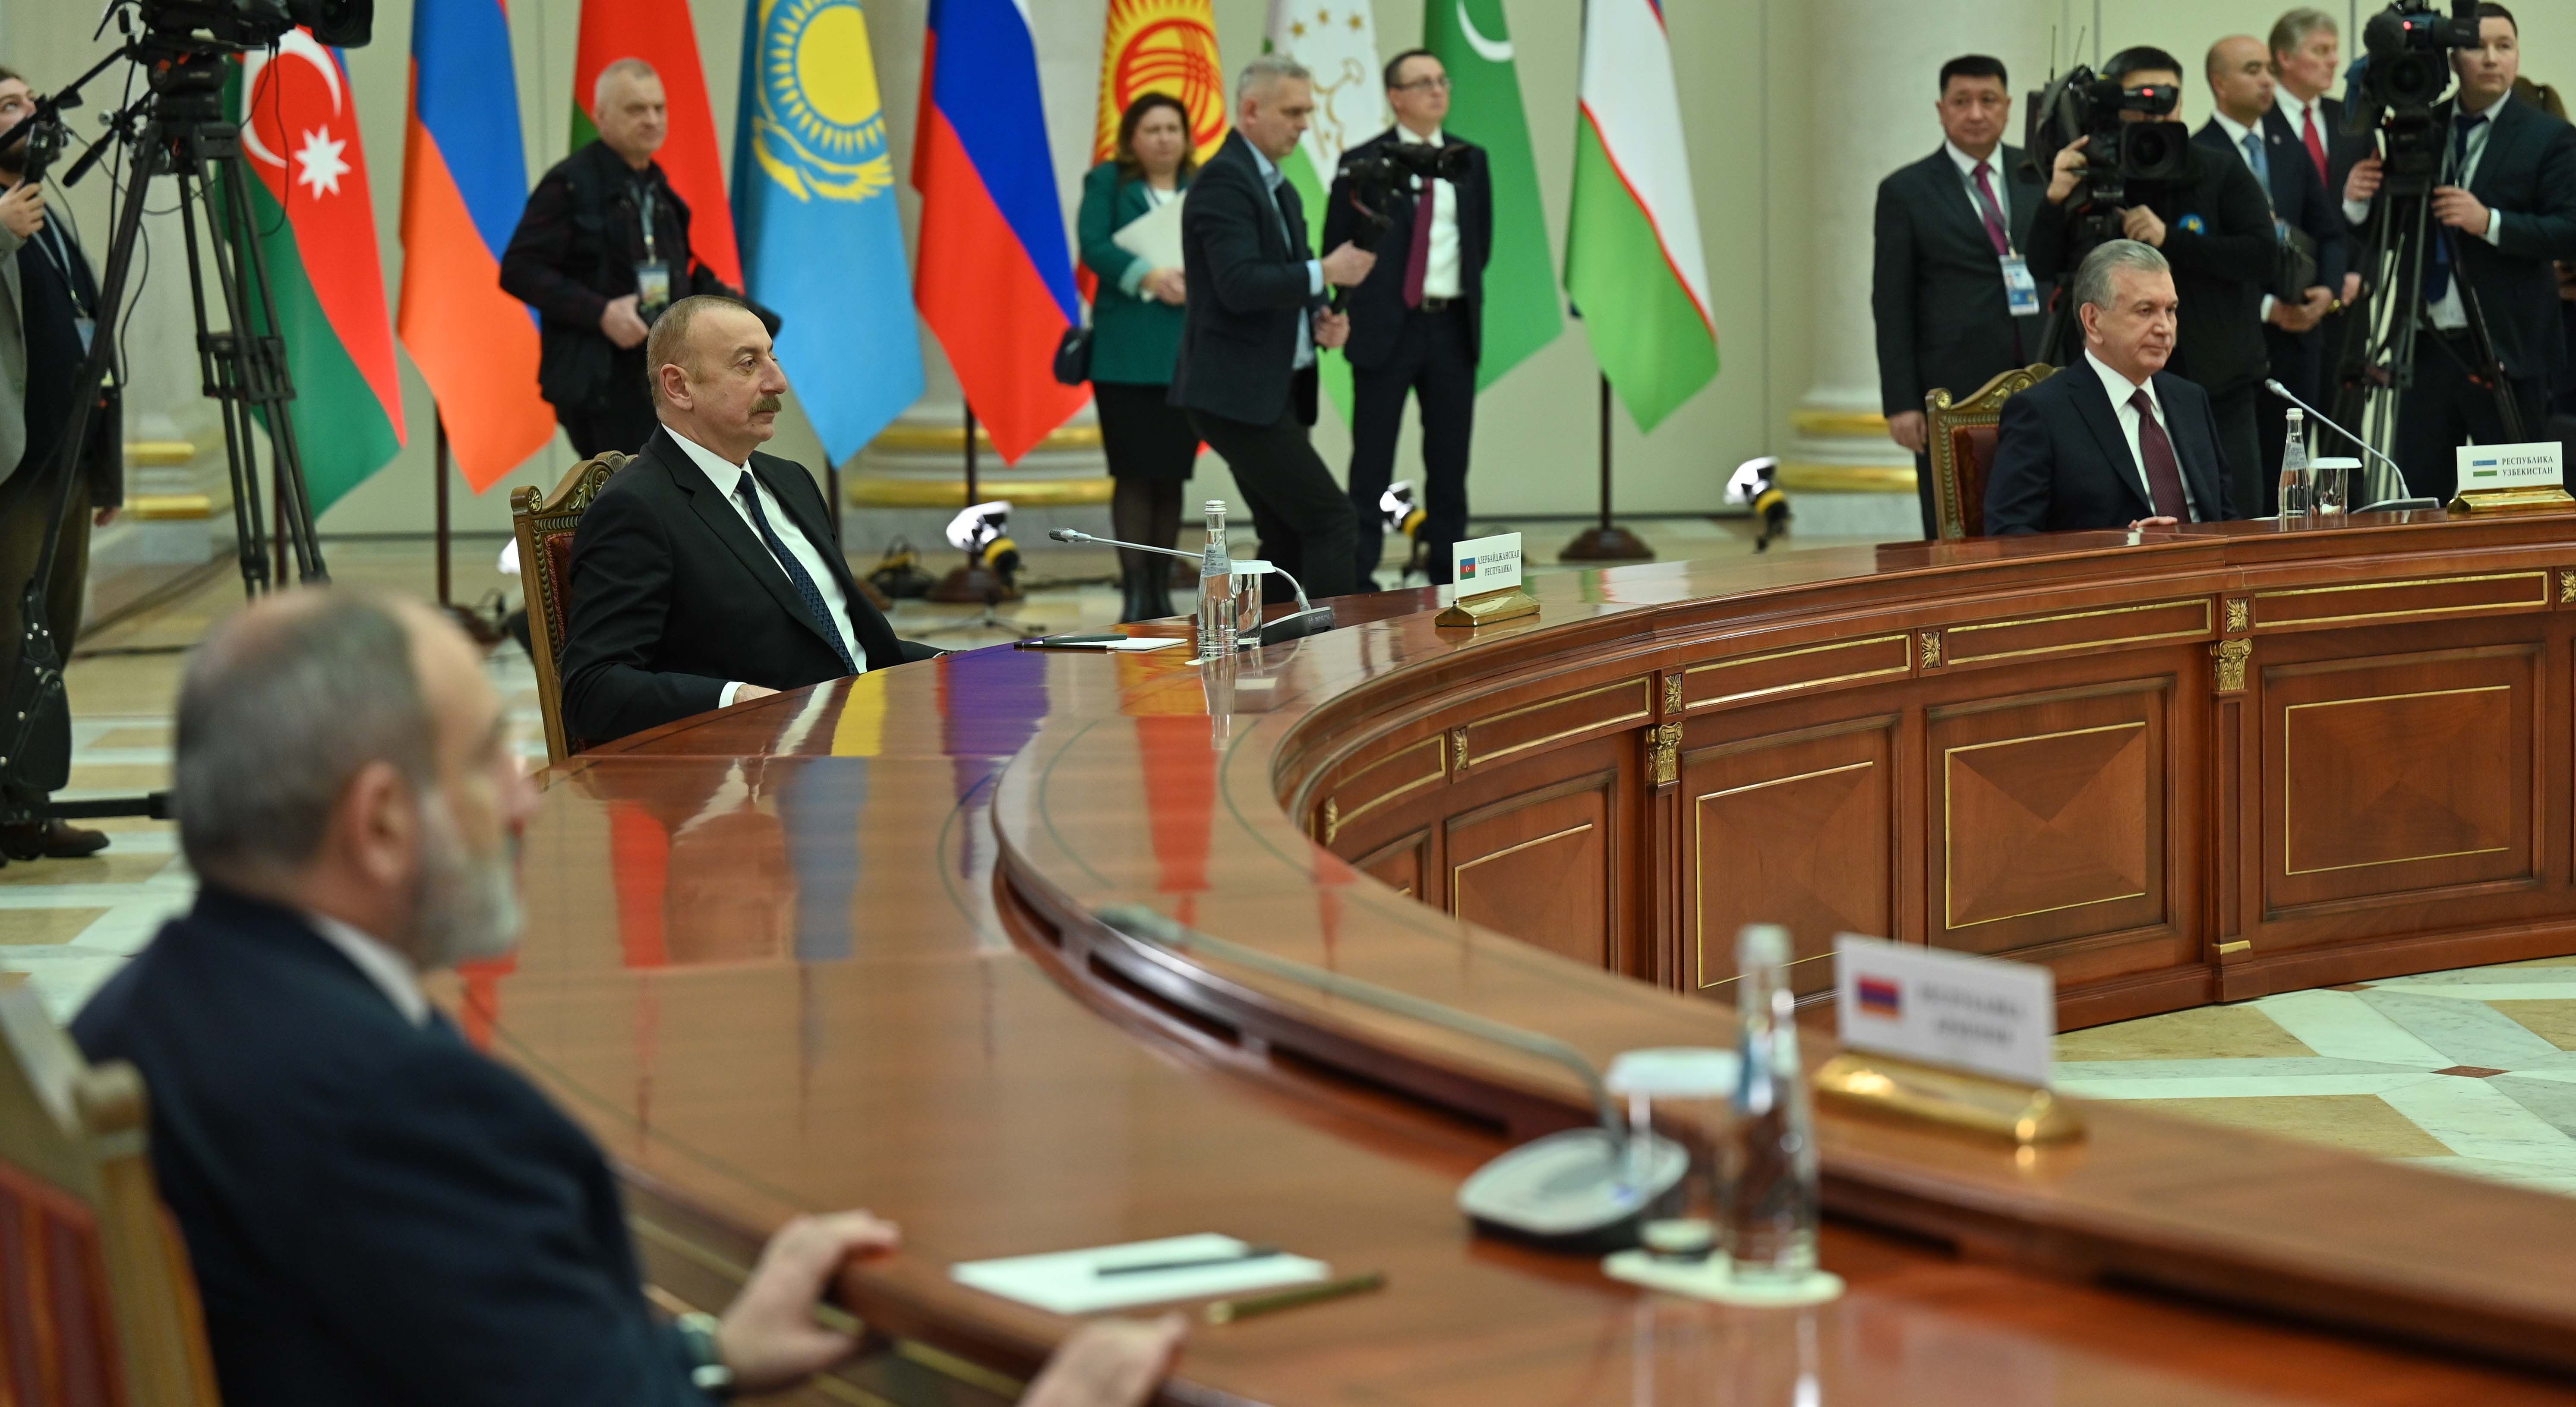 Товарооборот Казахстана со странами СНГ за 10 месяцев вырос на 11% 1770731 - Kapital.kz 